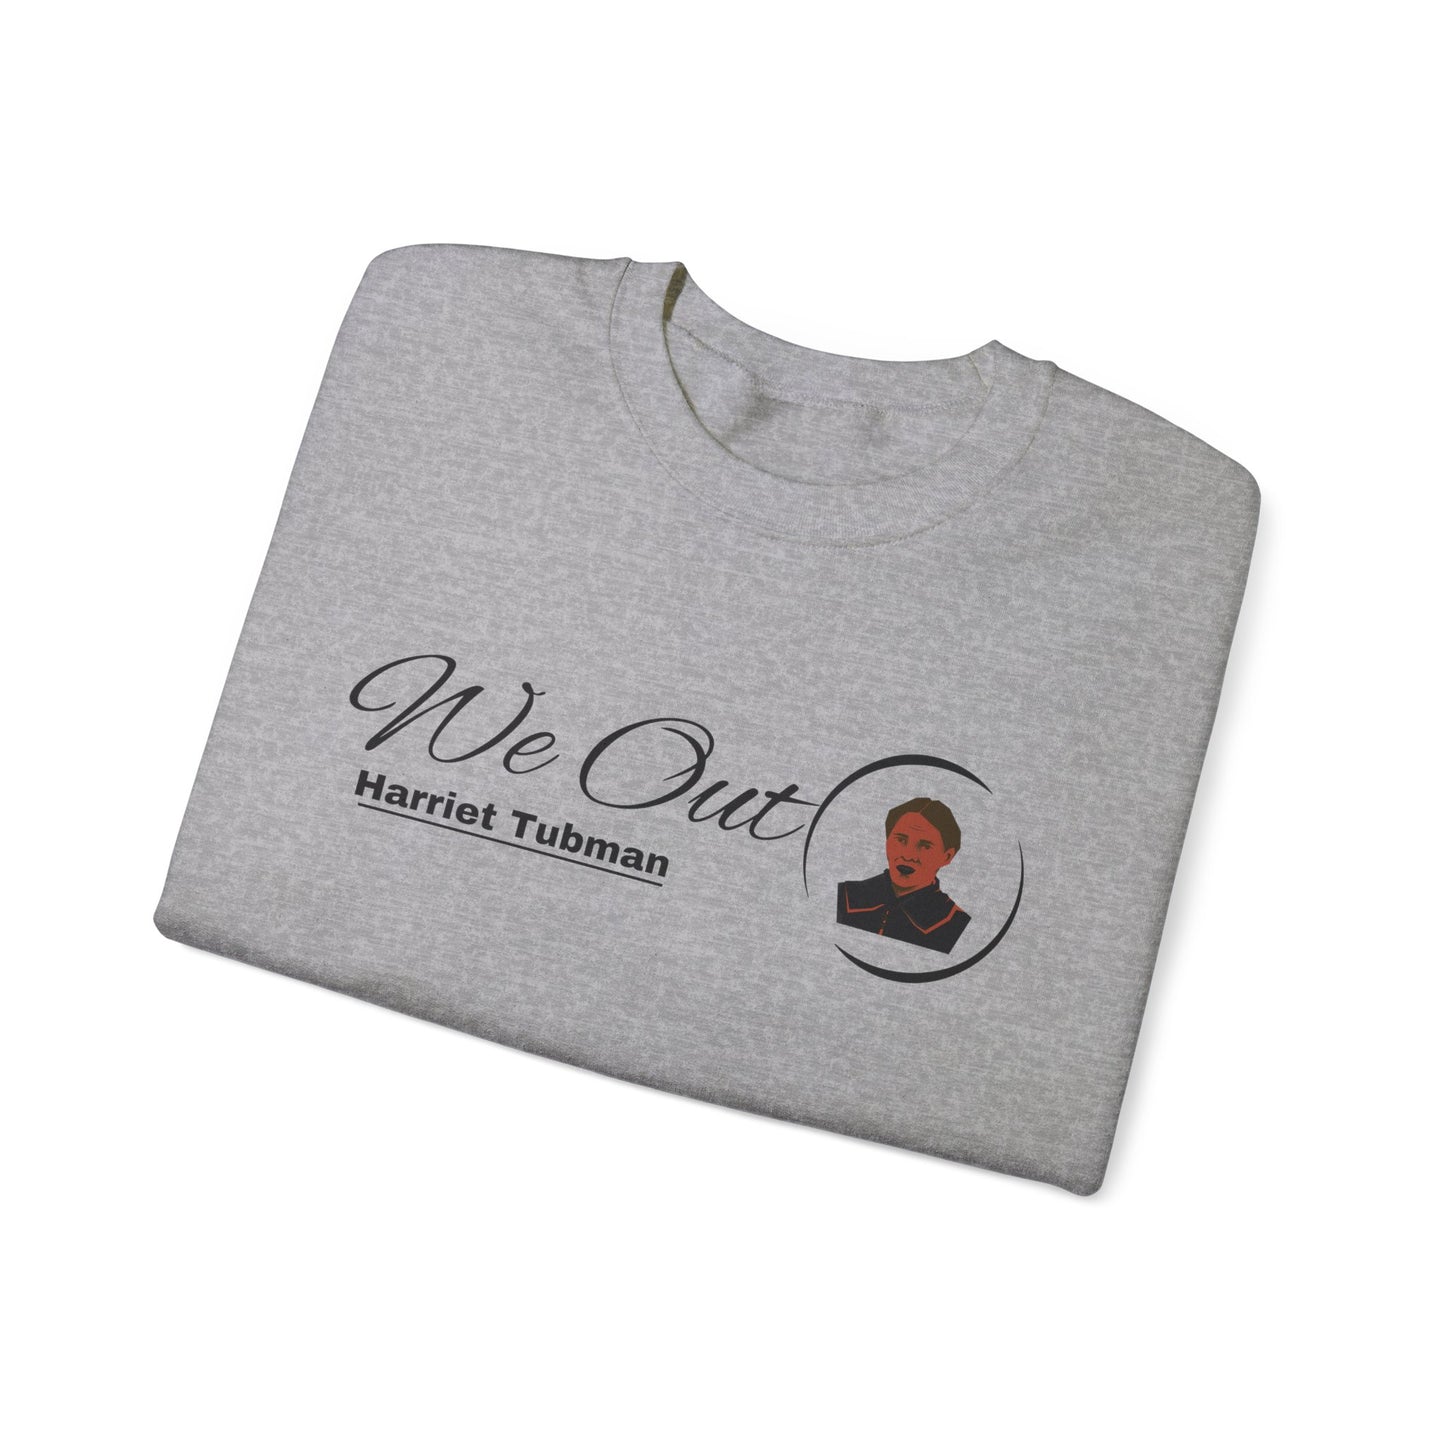 Harriet Tubman "We Out", Unisex Heavy Blend™ Crewneck Sweatshirt